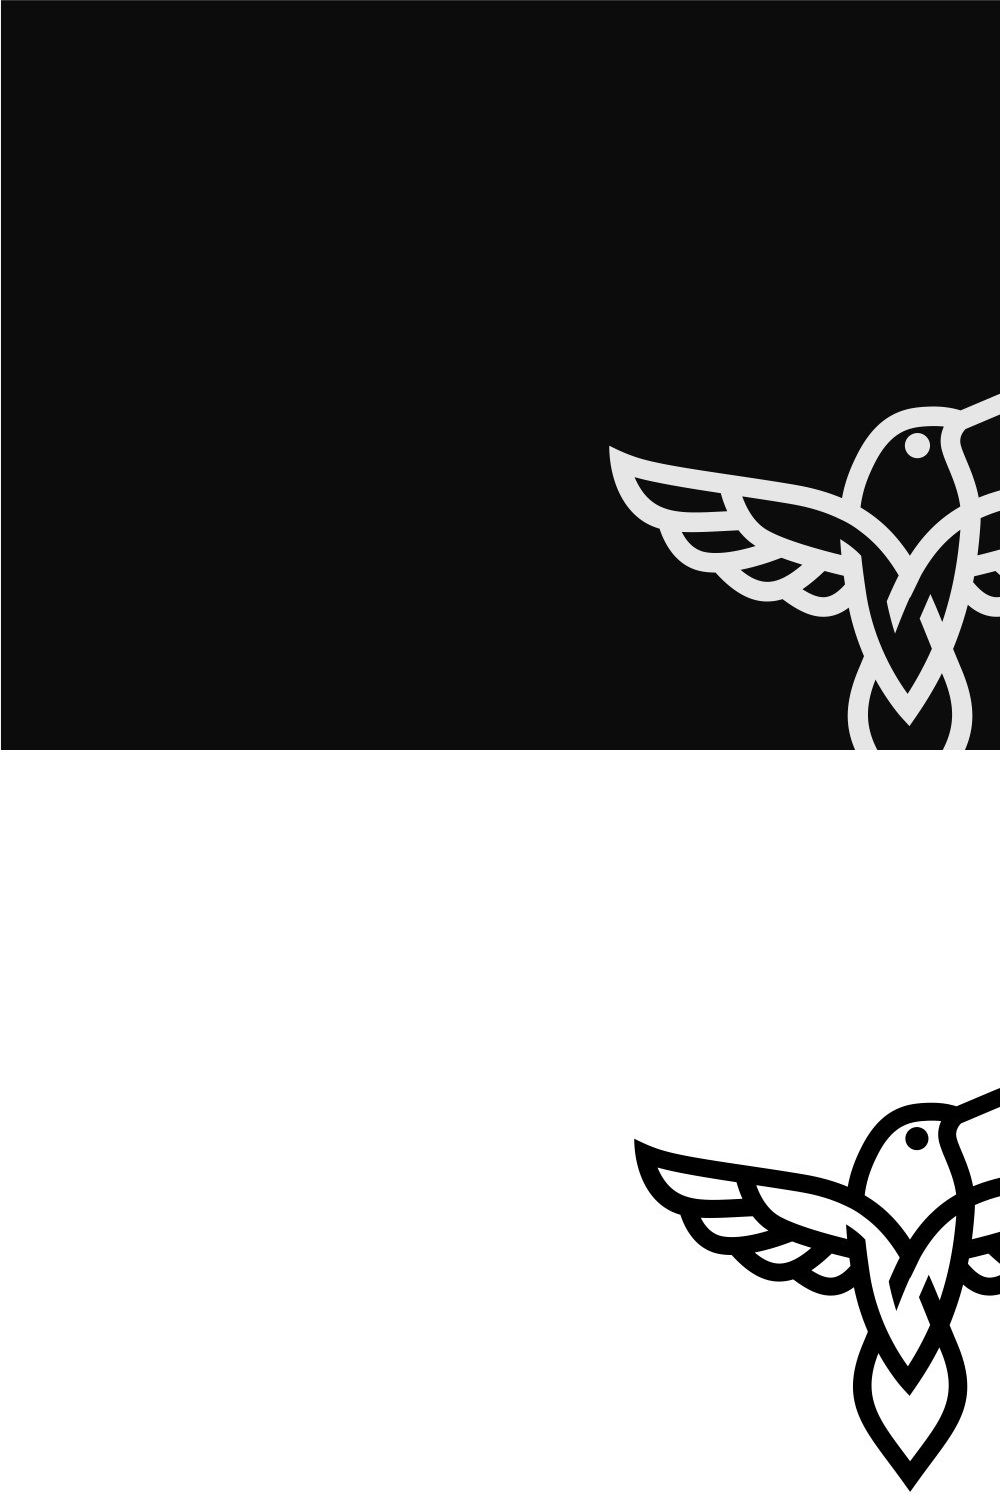 Hummingbird Logo pinterest preview image.